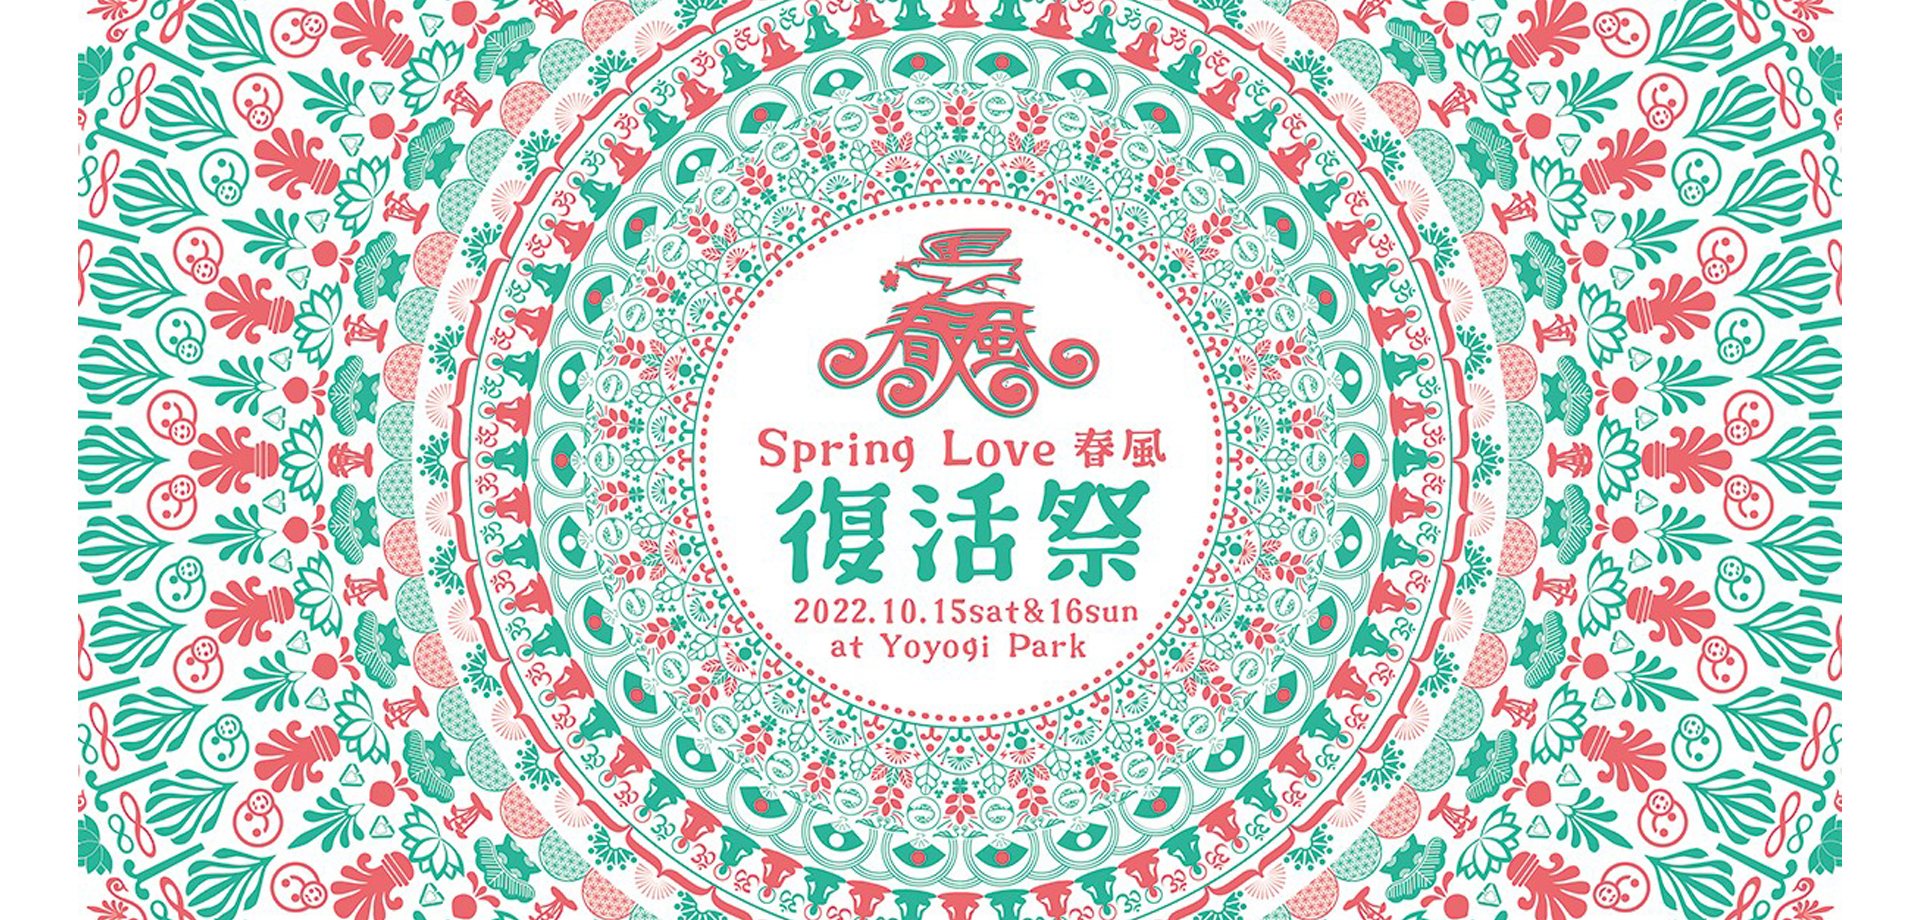 SPRING LOVE 春風2022 -復活祭-